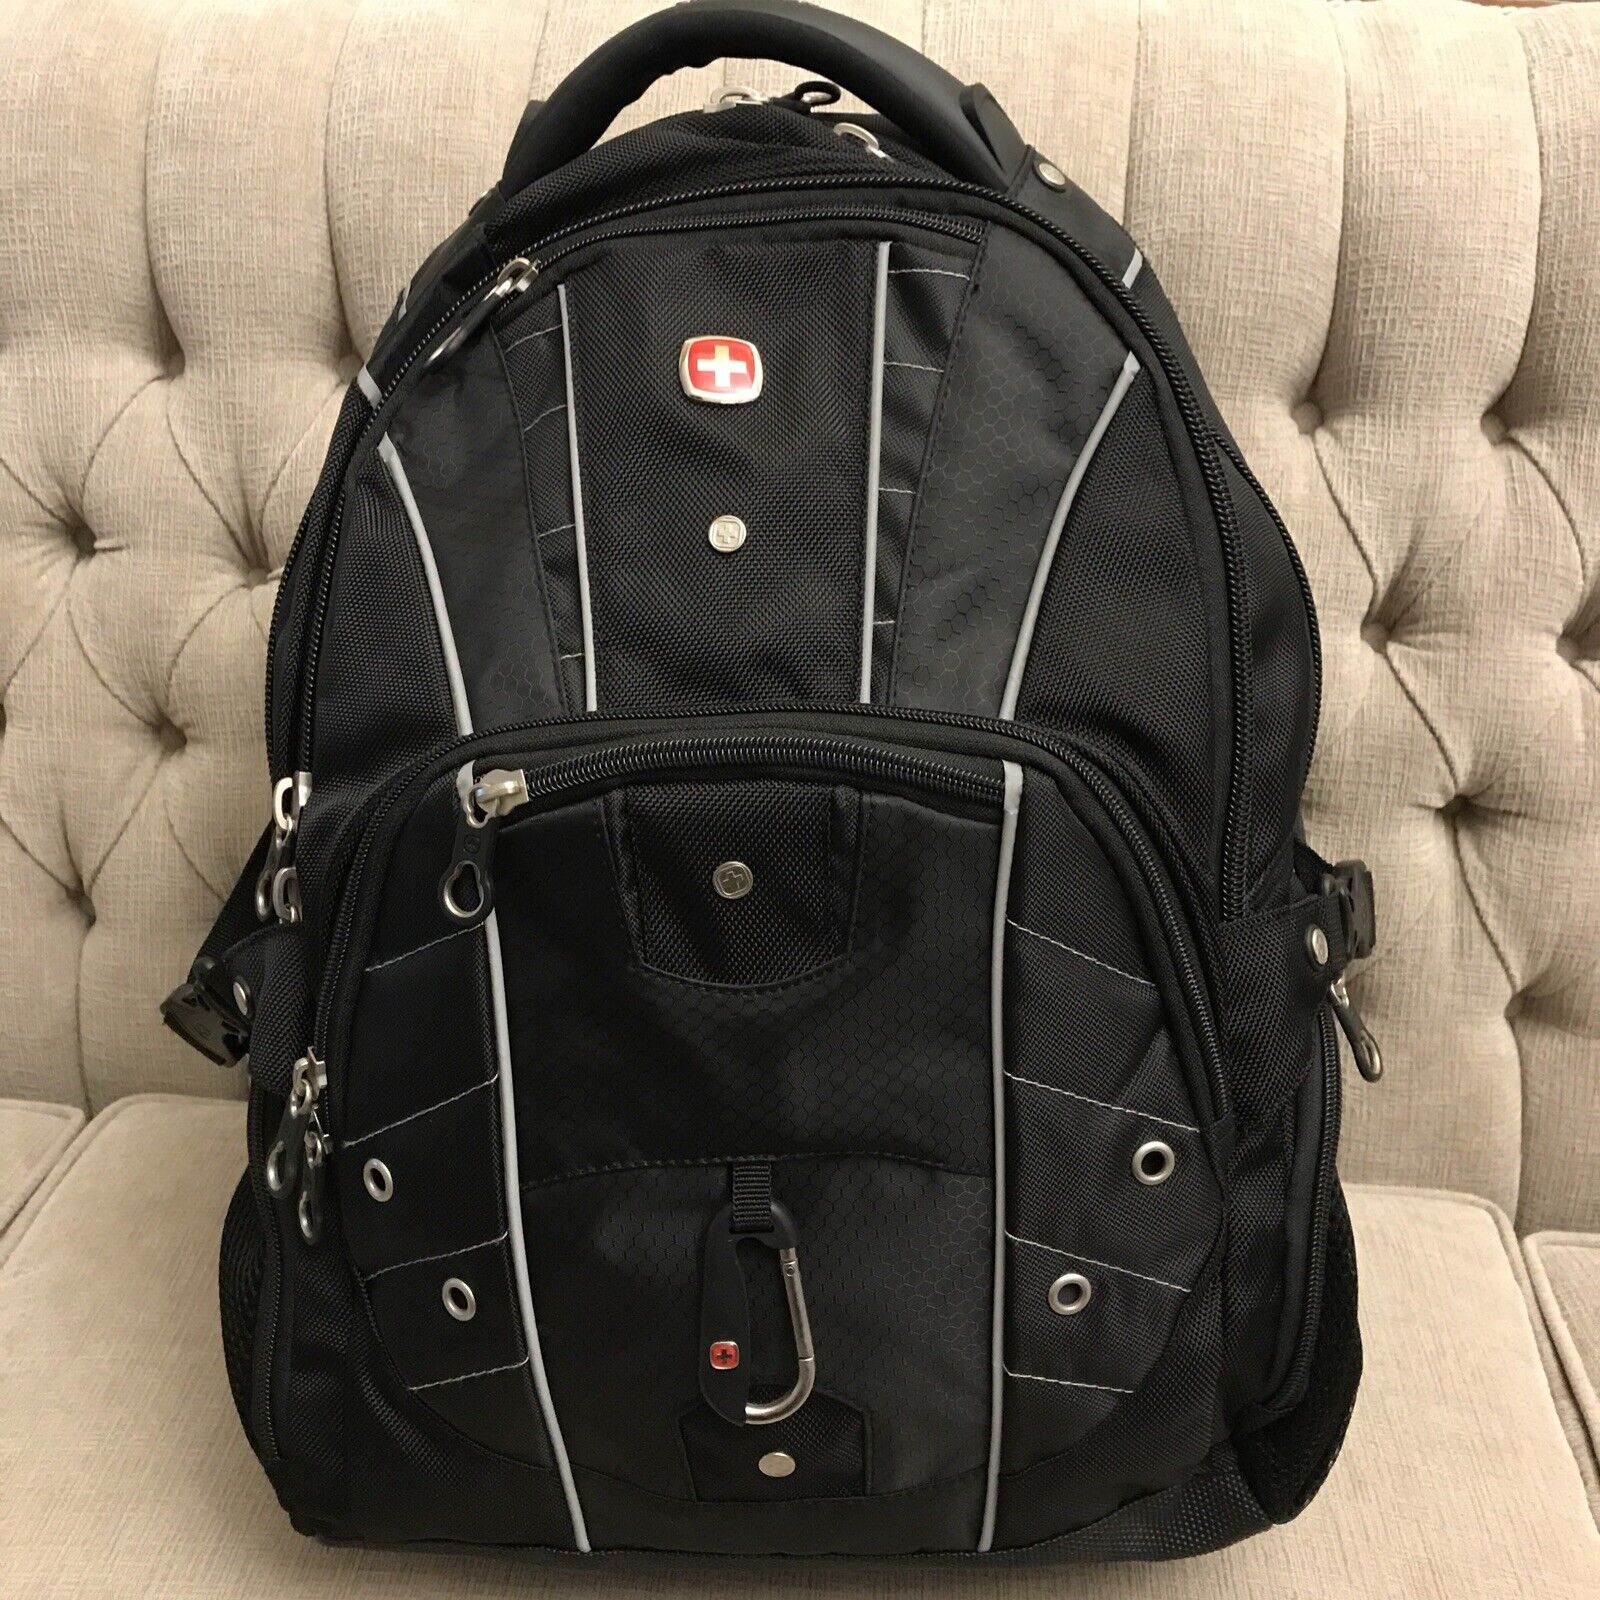 Swiss Gear Black TSA Friendly ScanSmart Laptop Backpack Holiday Excellent